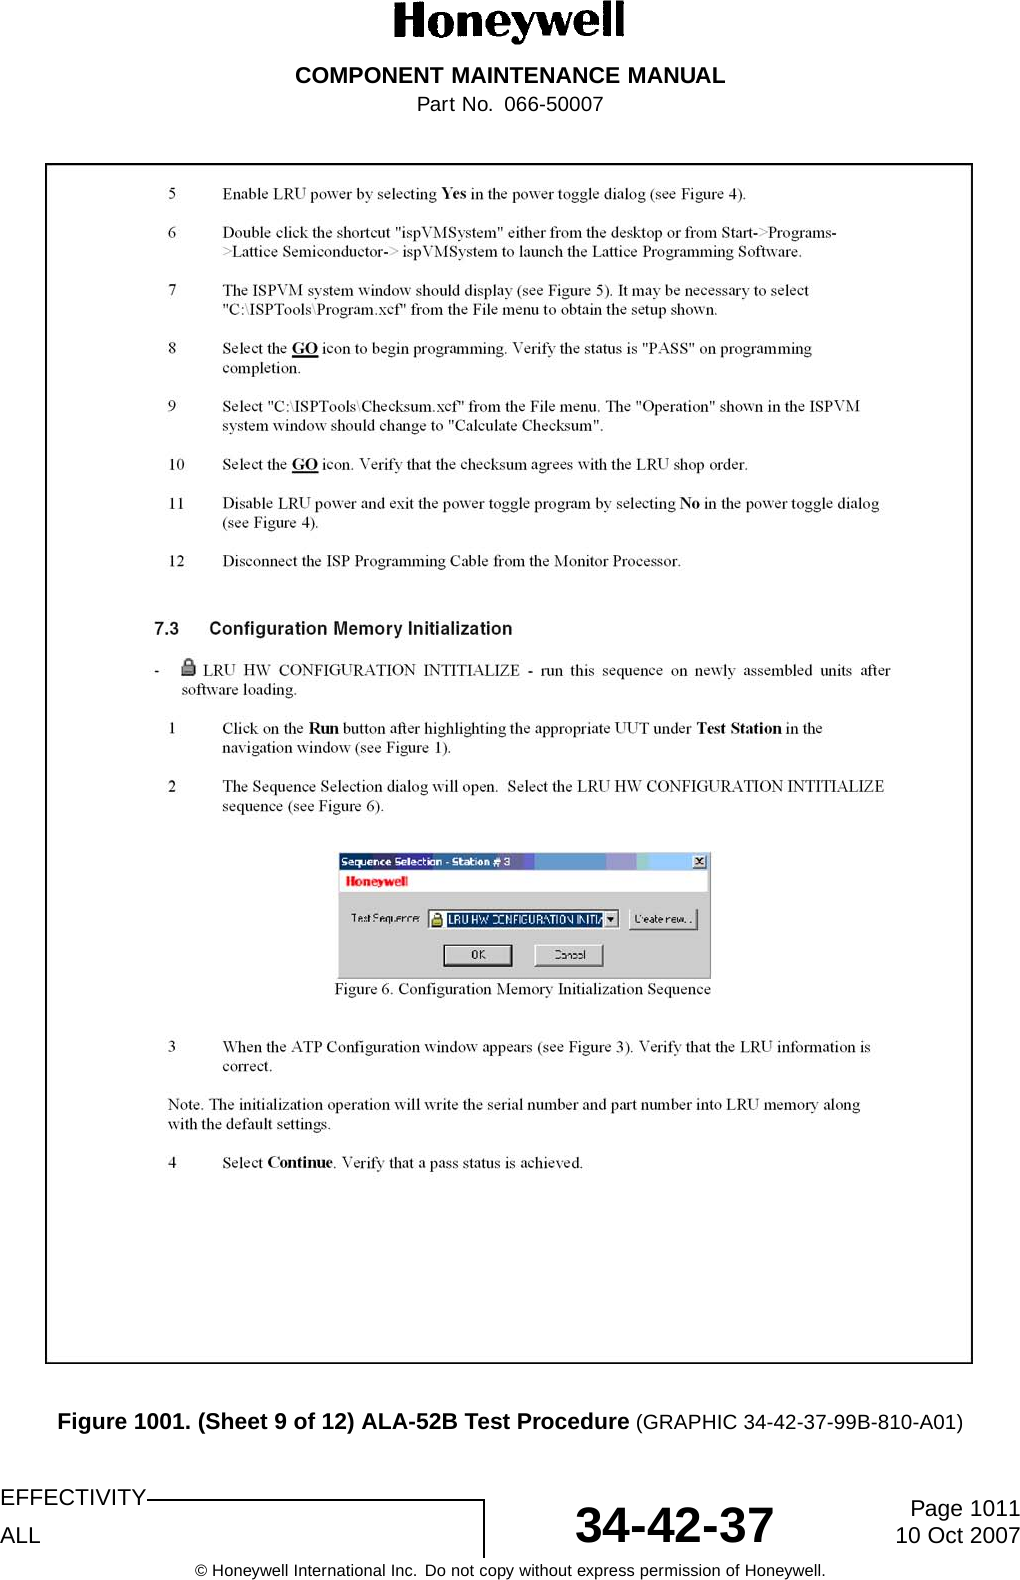 COMPONENT MAINTENANCE MANUALPart No. 066-50007Figure 1001. (Sheet 9 of 12) ALA-52B Test Procedure (GRAPHIC 34-42-37-99B-810-A01)EFFECTIVITYALL 34-42-37 Page 101110 Oct 2007© Honeywell International Inc. Do not copy without express permission of Honeywell.